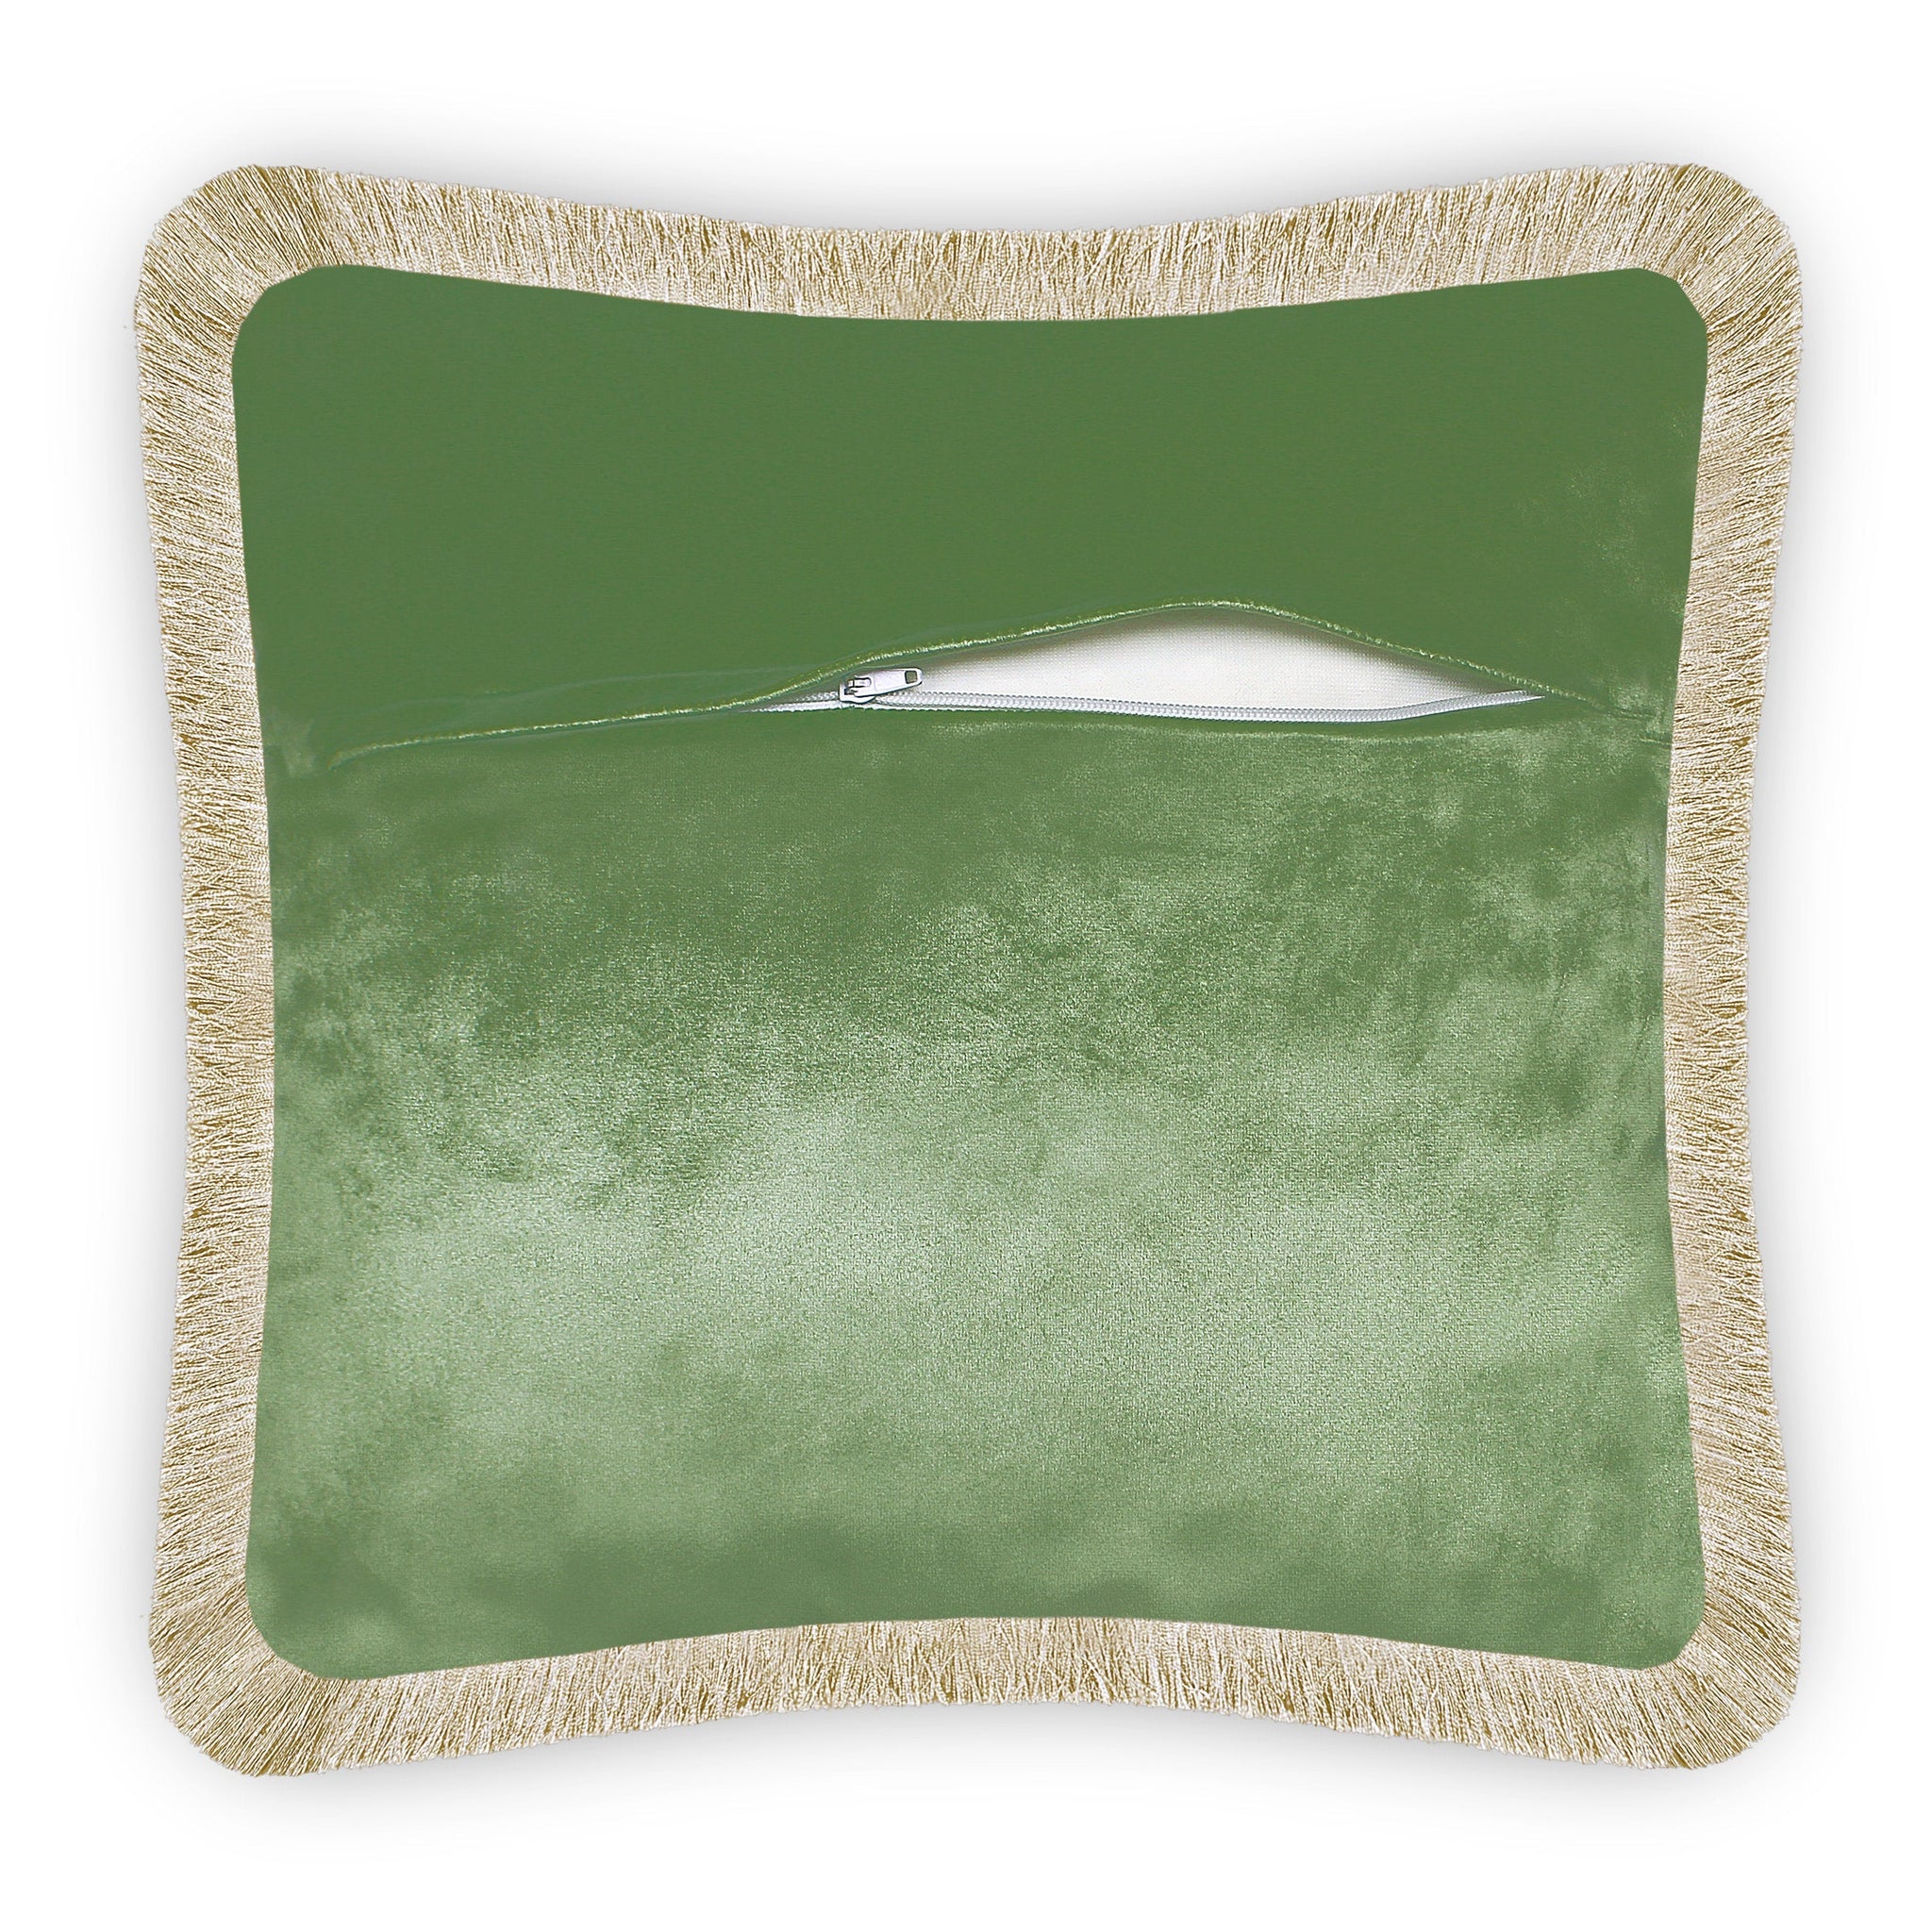 Beige Velvet Cushion Cover Classic Ottoman Floral Decorative Pillowcase Home Decor Throw Pillow for Sofa Chair Living Room 45x45 cm 18x18 In